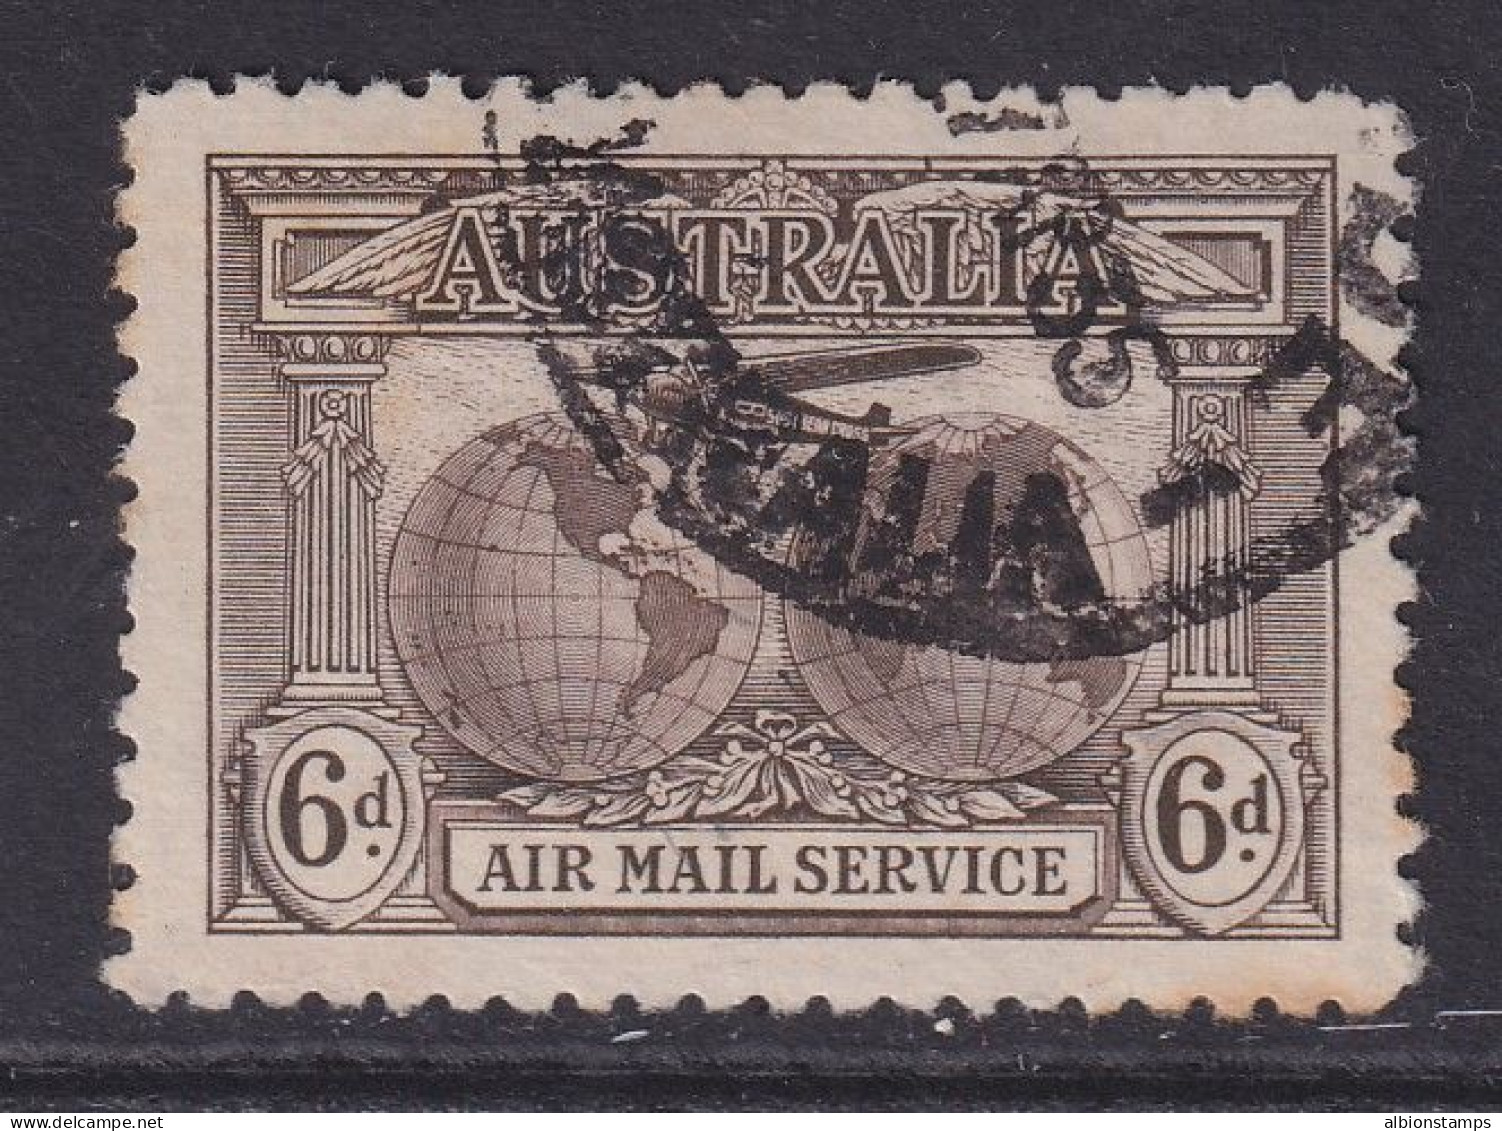 Australia, Scott C3 (SG 139), Used - Usados